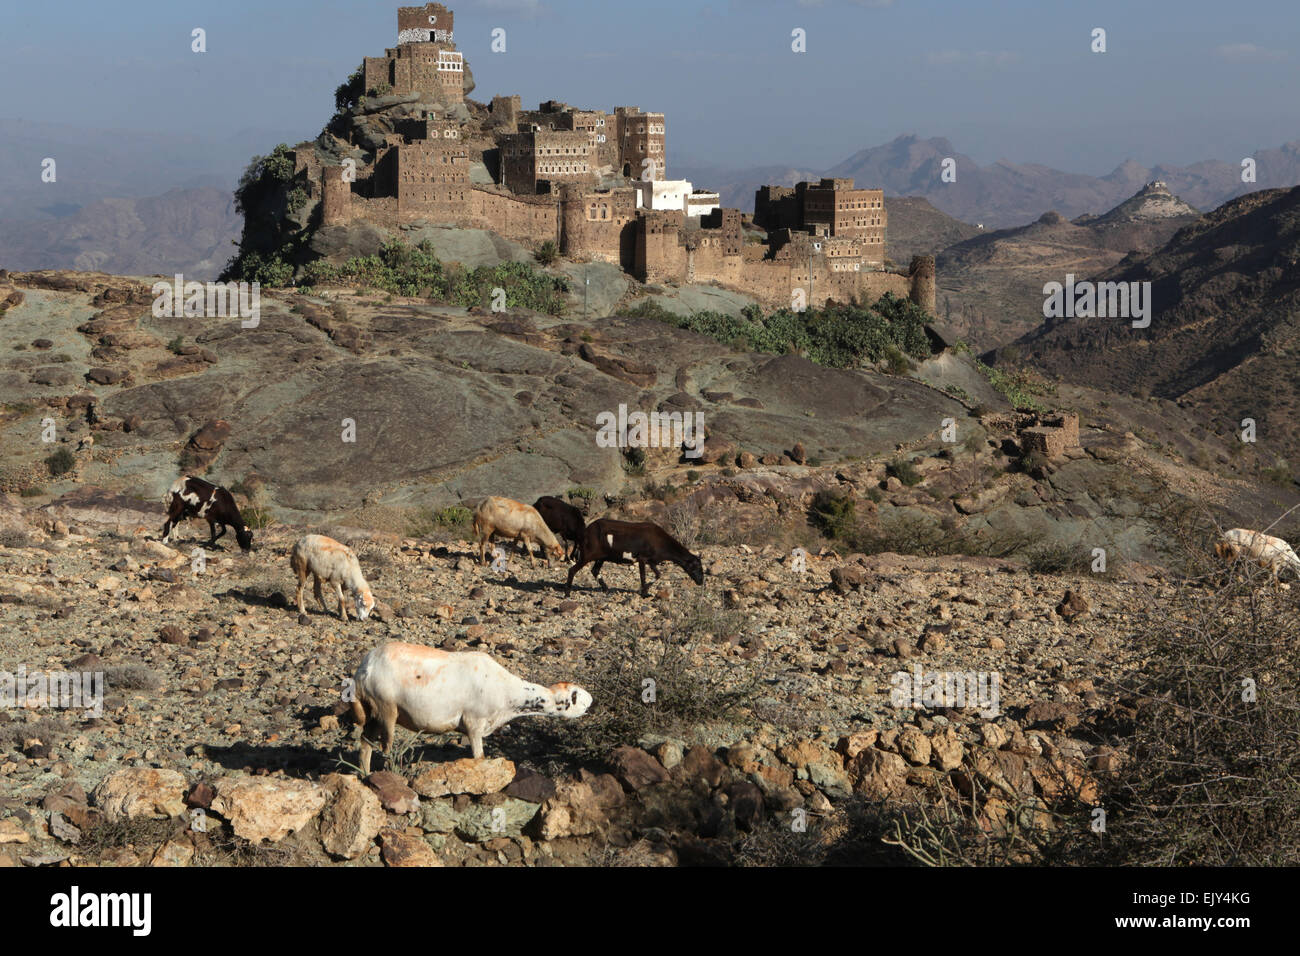 Goat farming in the Haraz mountain region, Yemen. Stock Photo